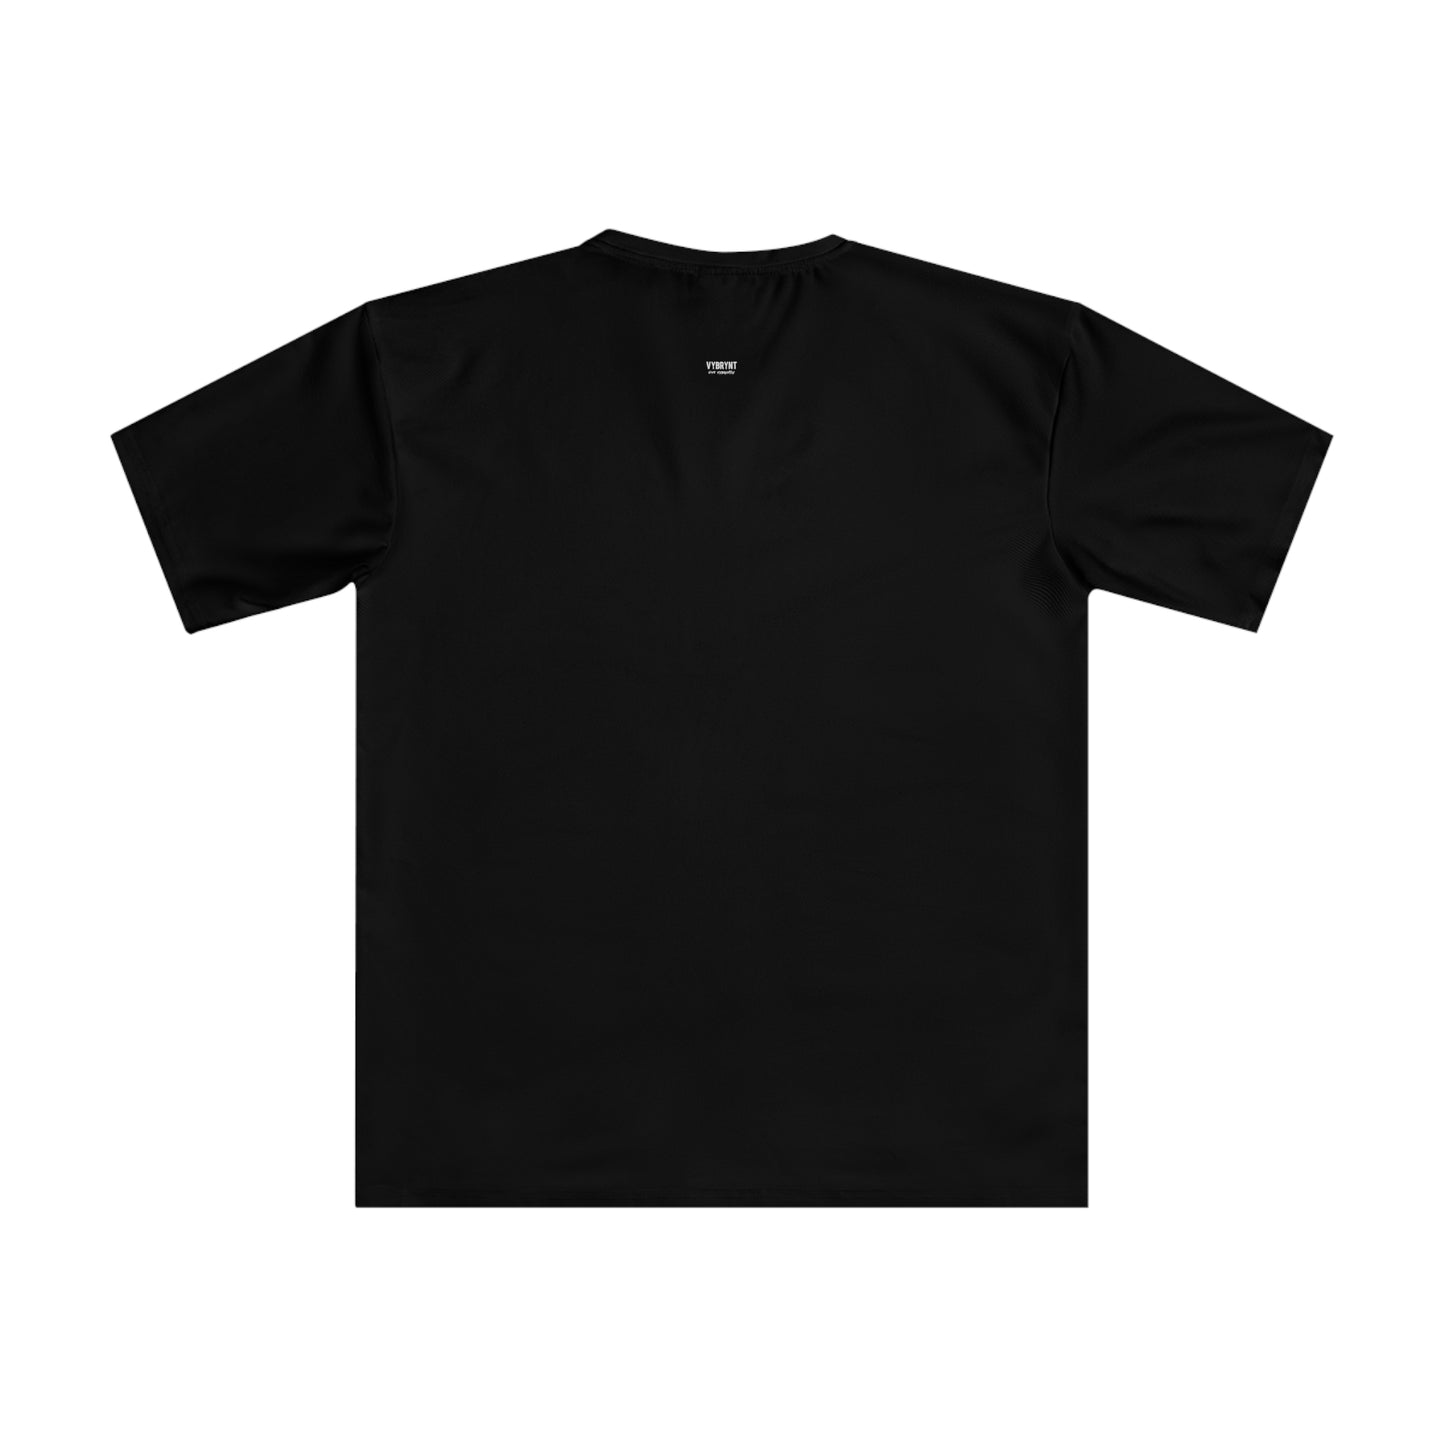 Retro Men's T-shirt